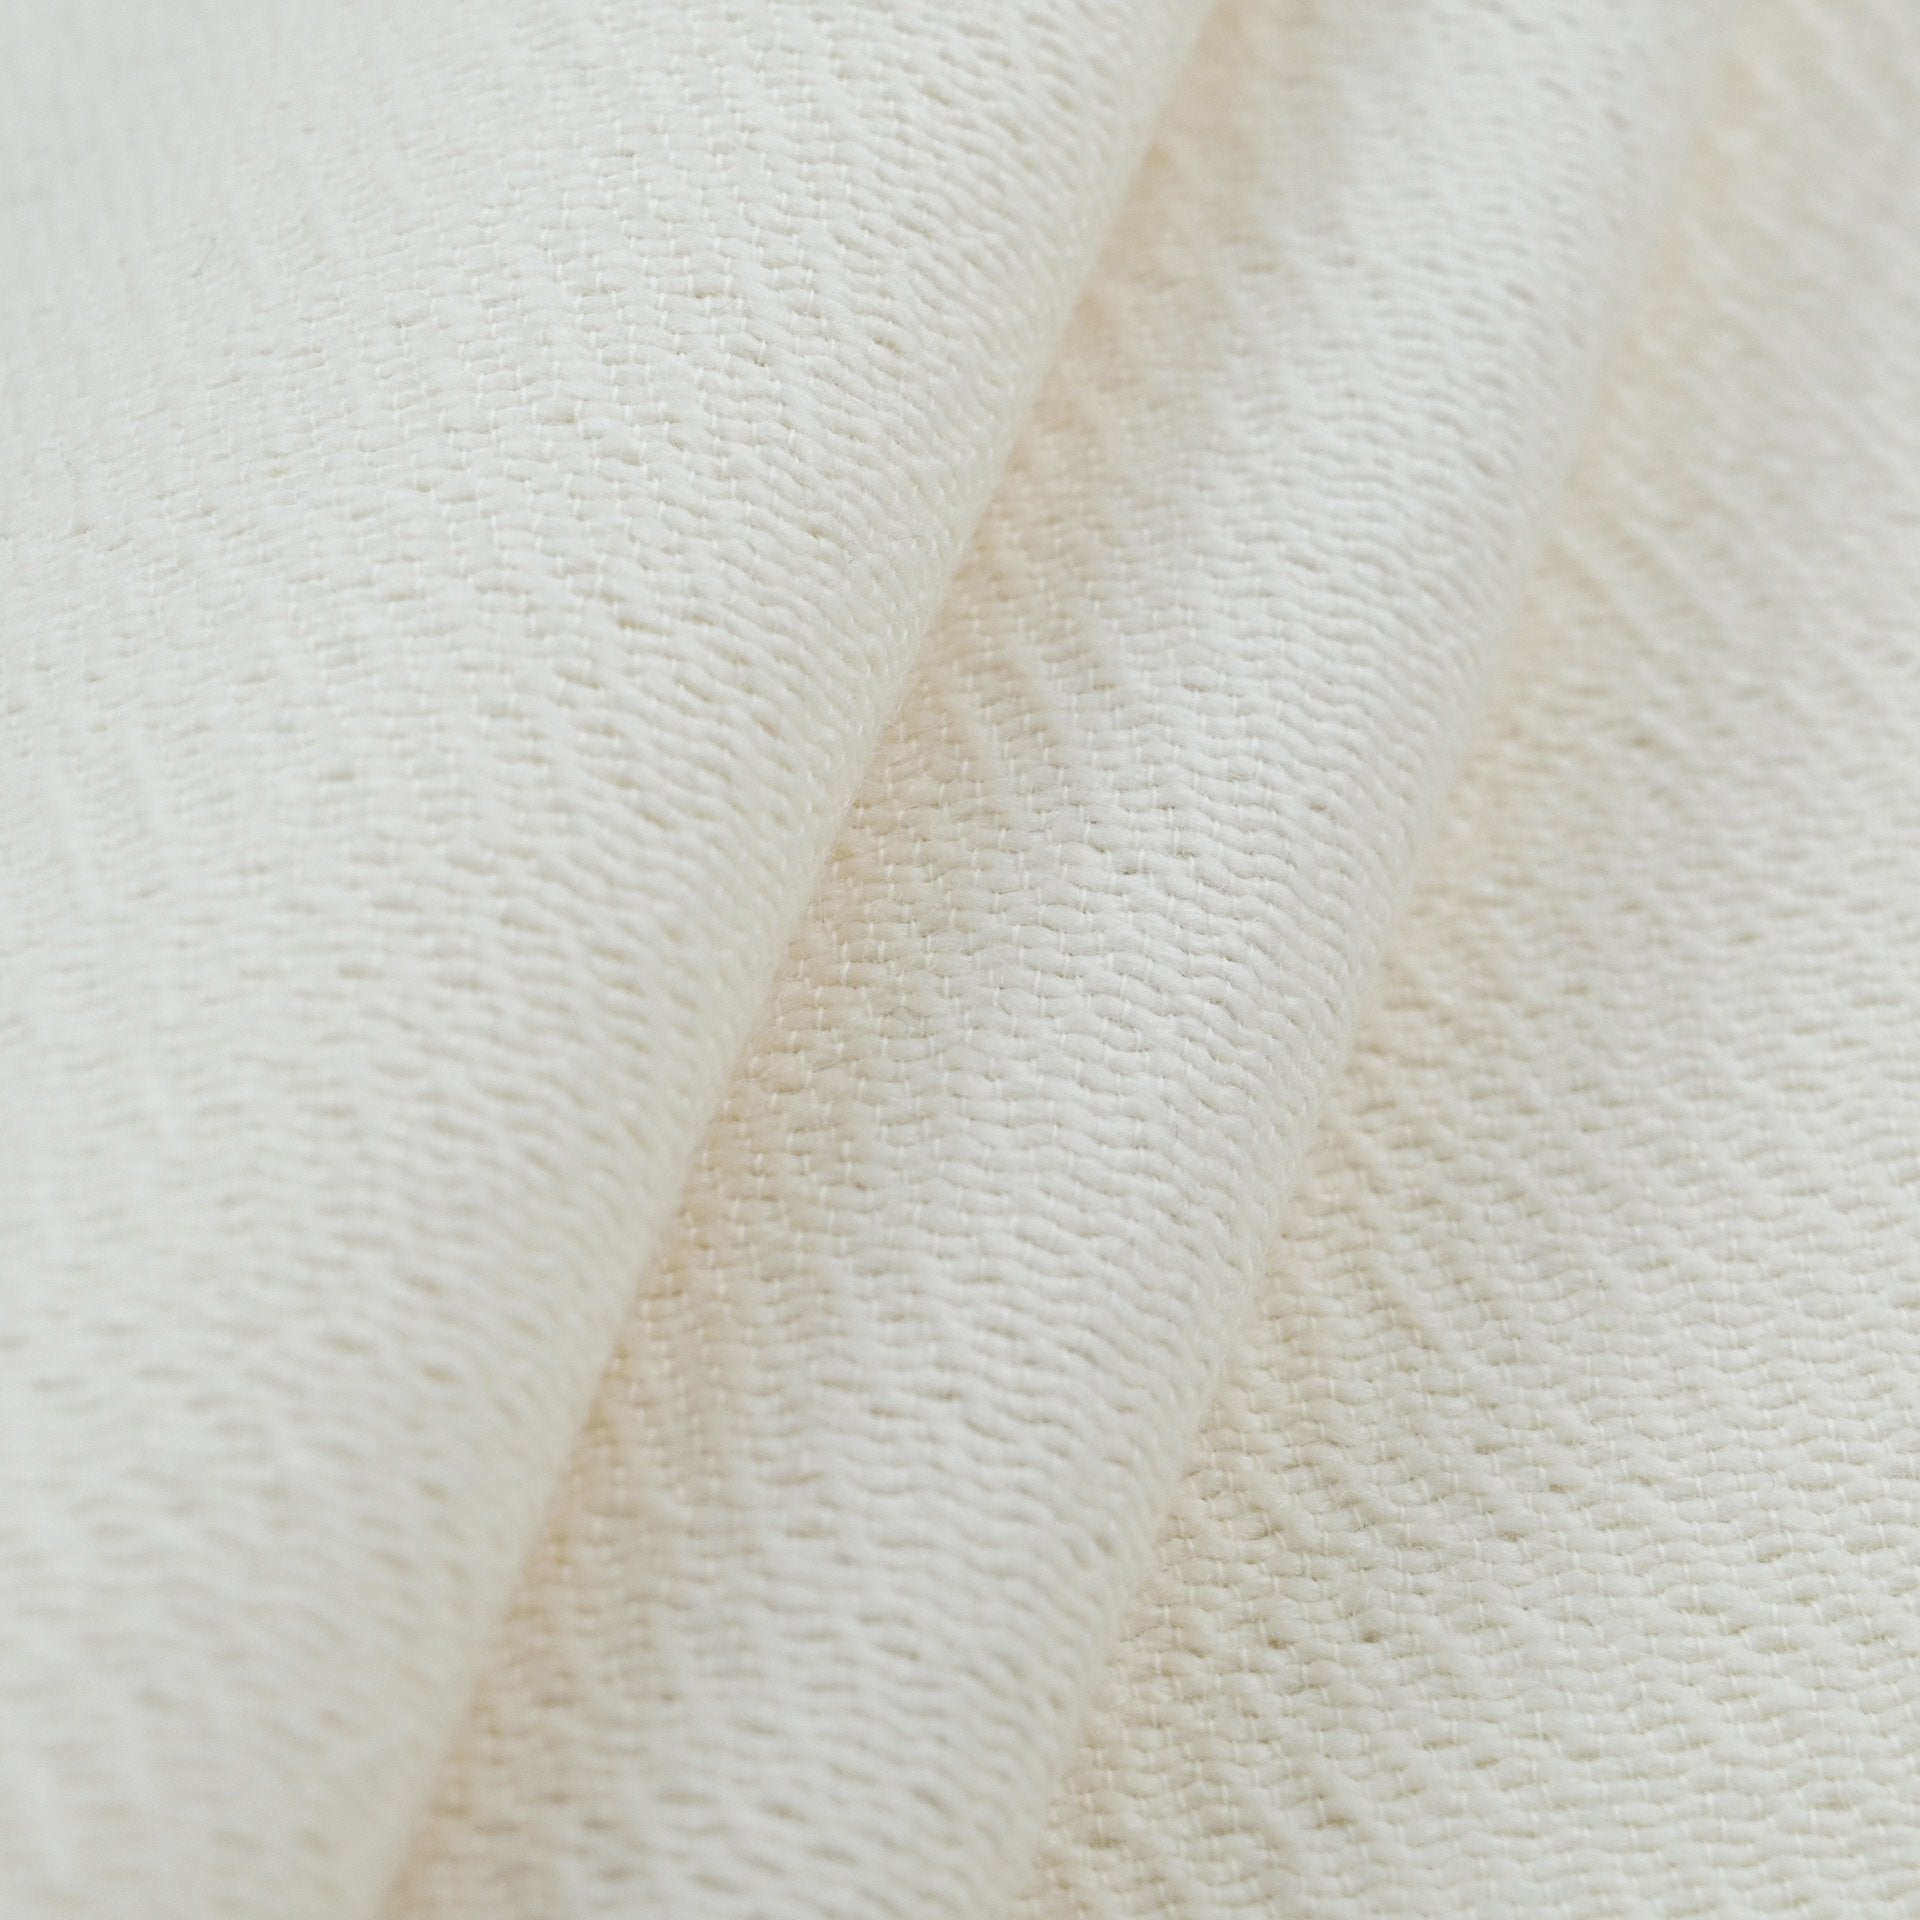 Siegfried wool fabric - wool white